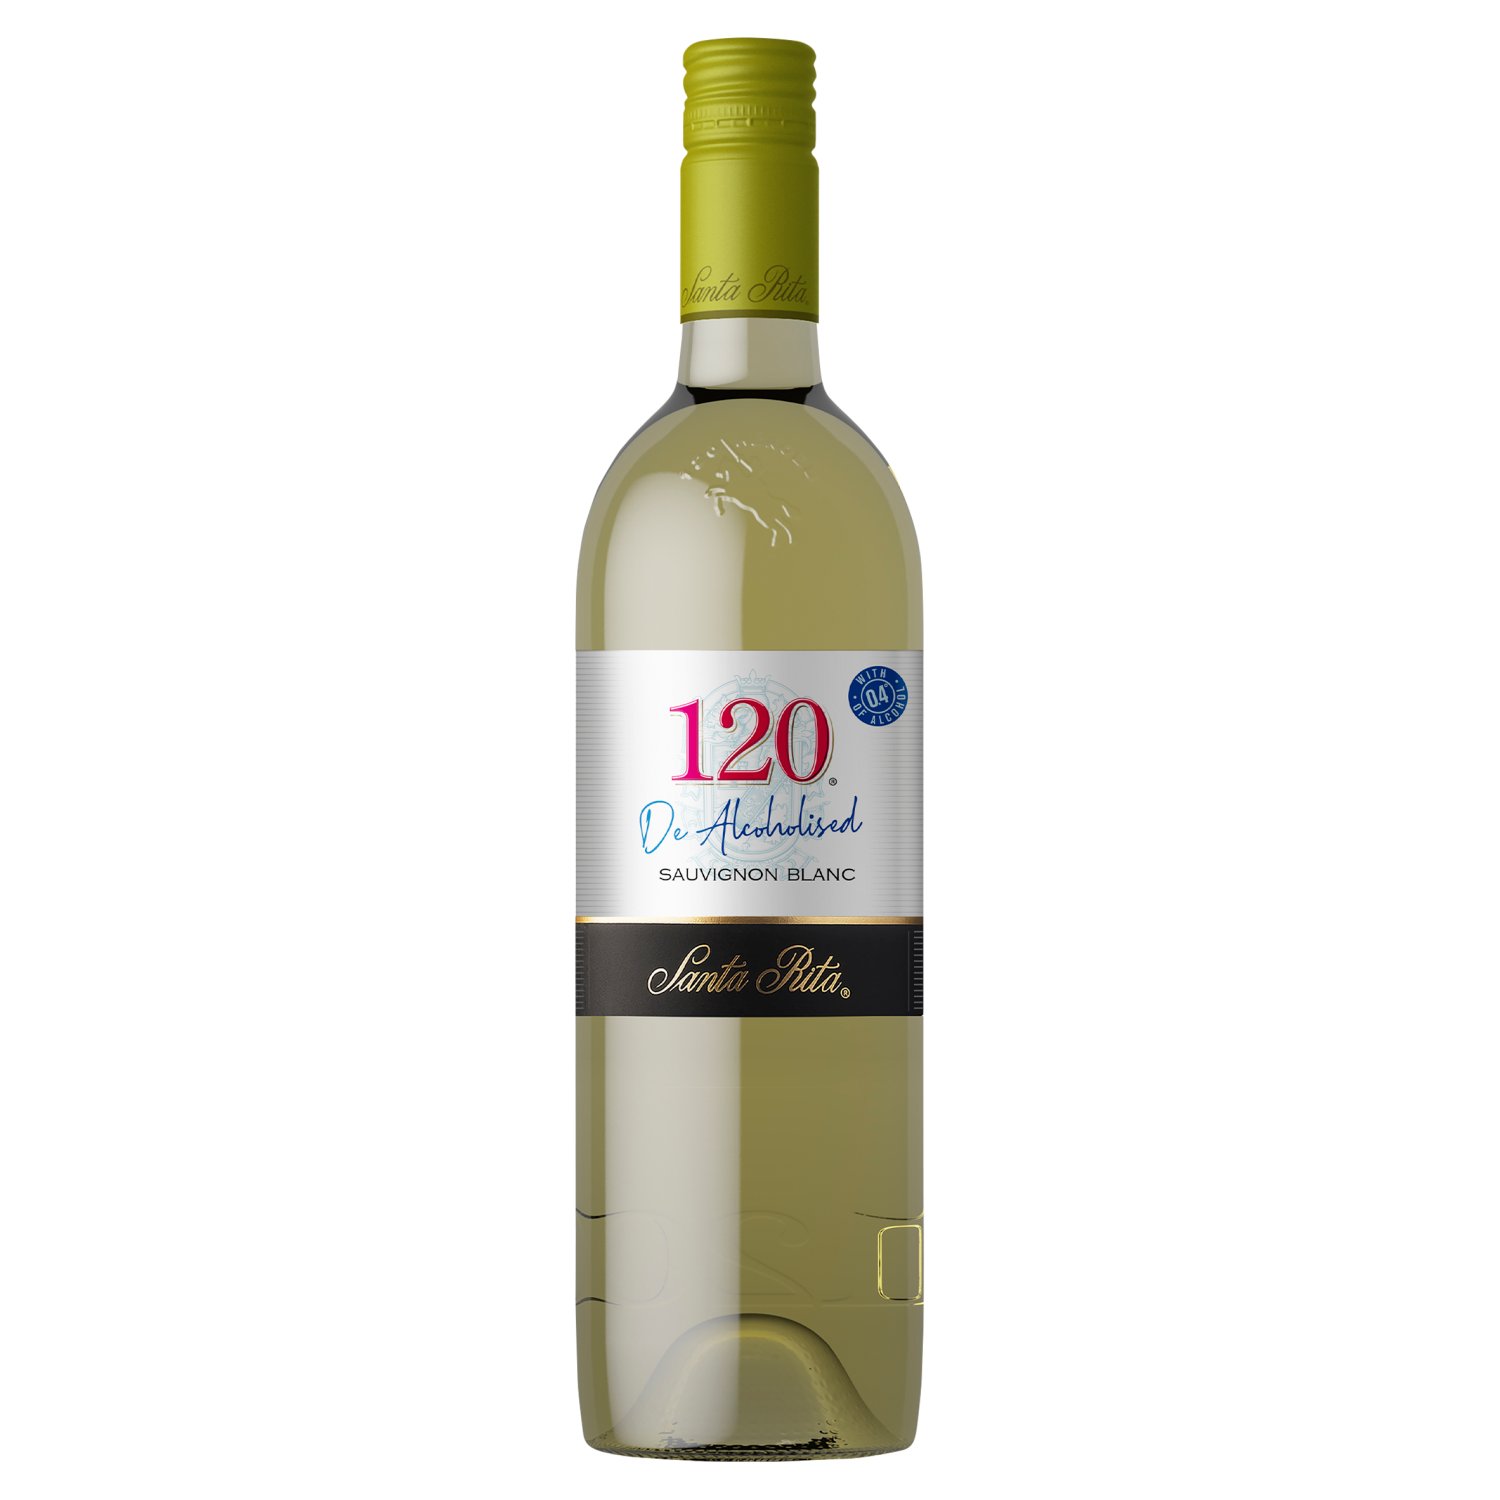 Santa Rita 120 De-alcoholised Sauvignon Blanc (75 cl)